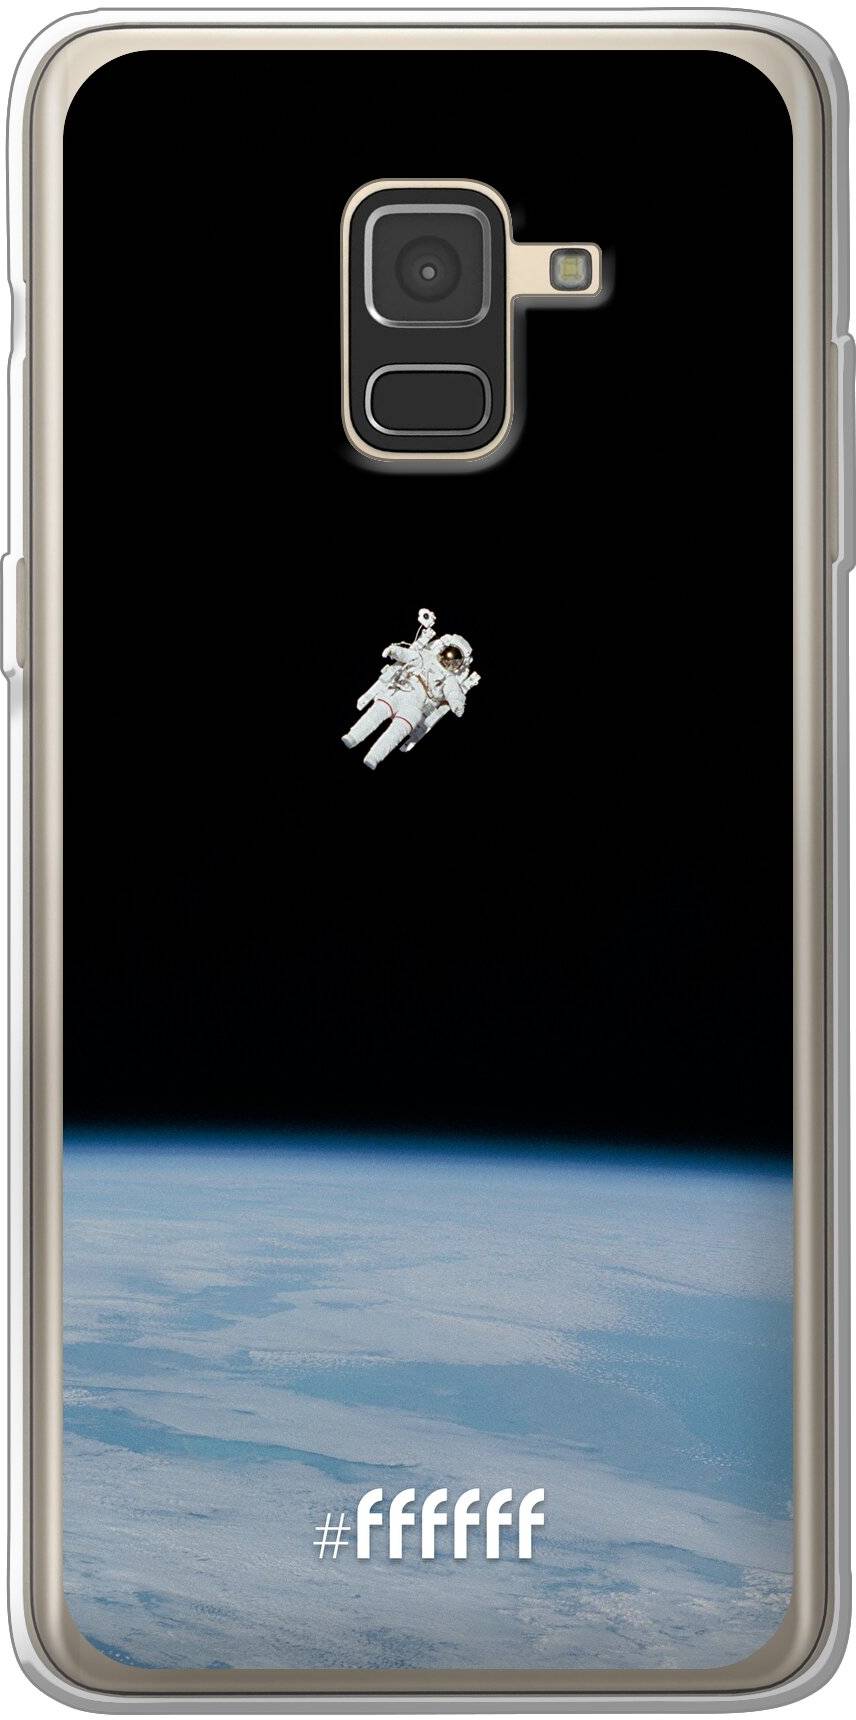 Spacewalk Galaxy A8 (2018)